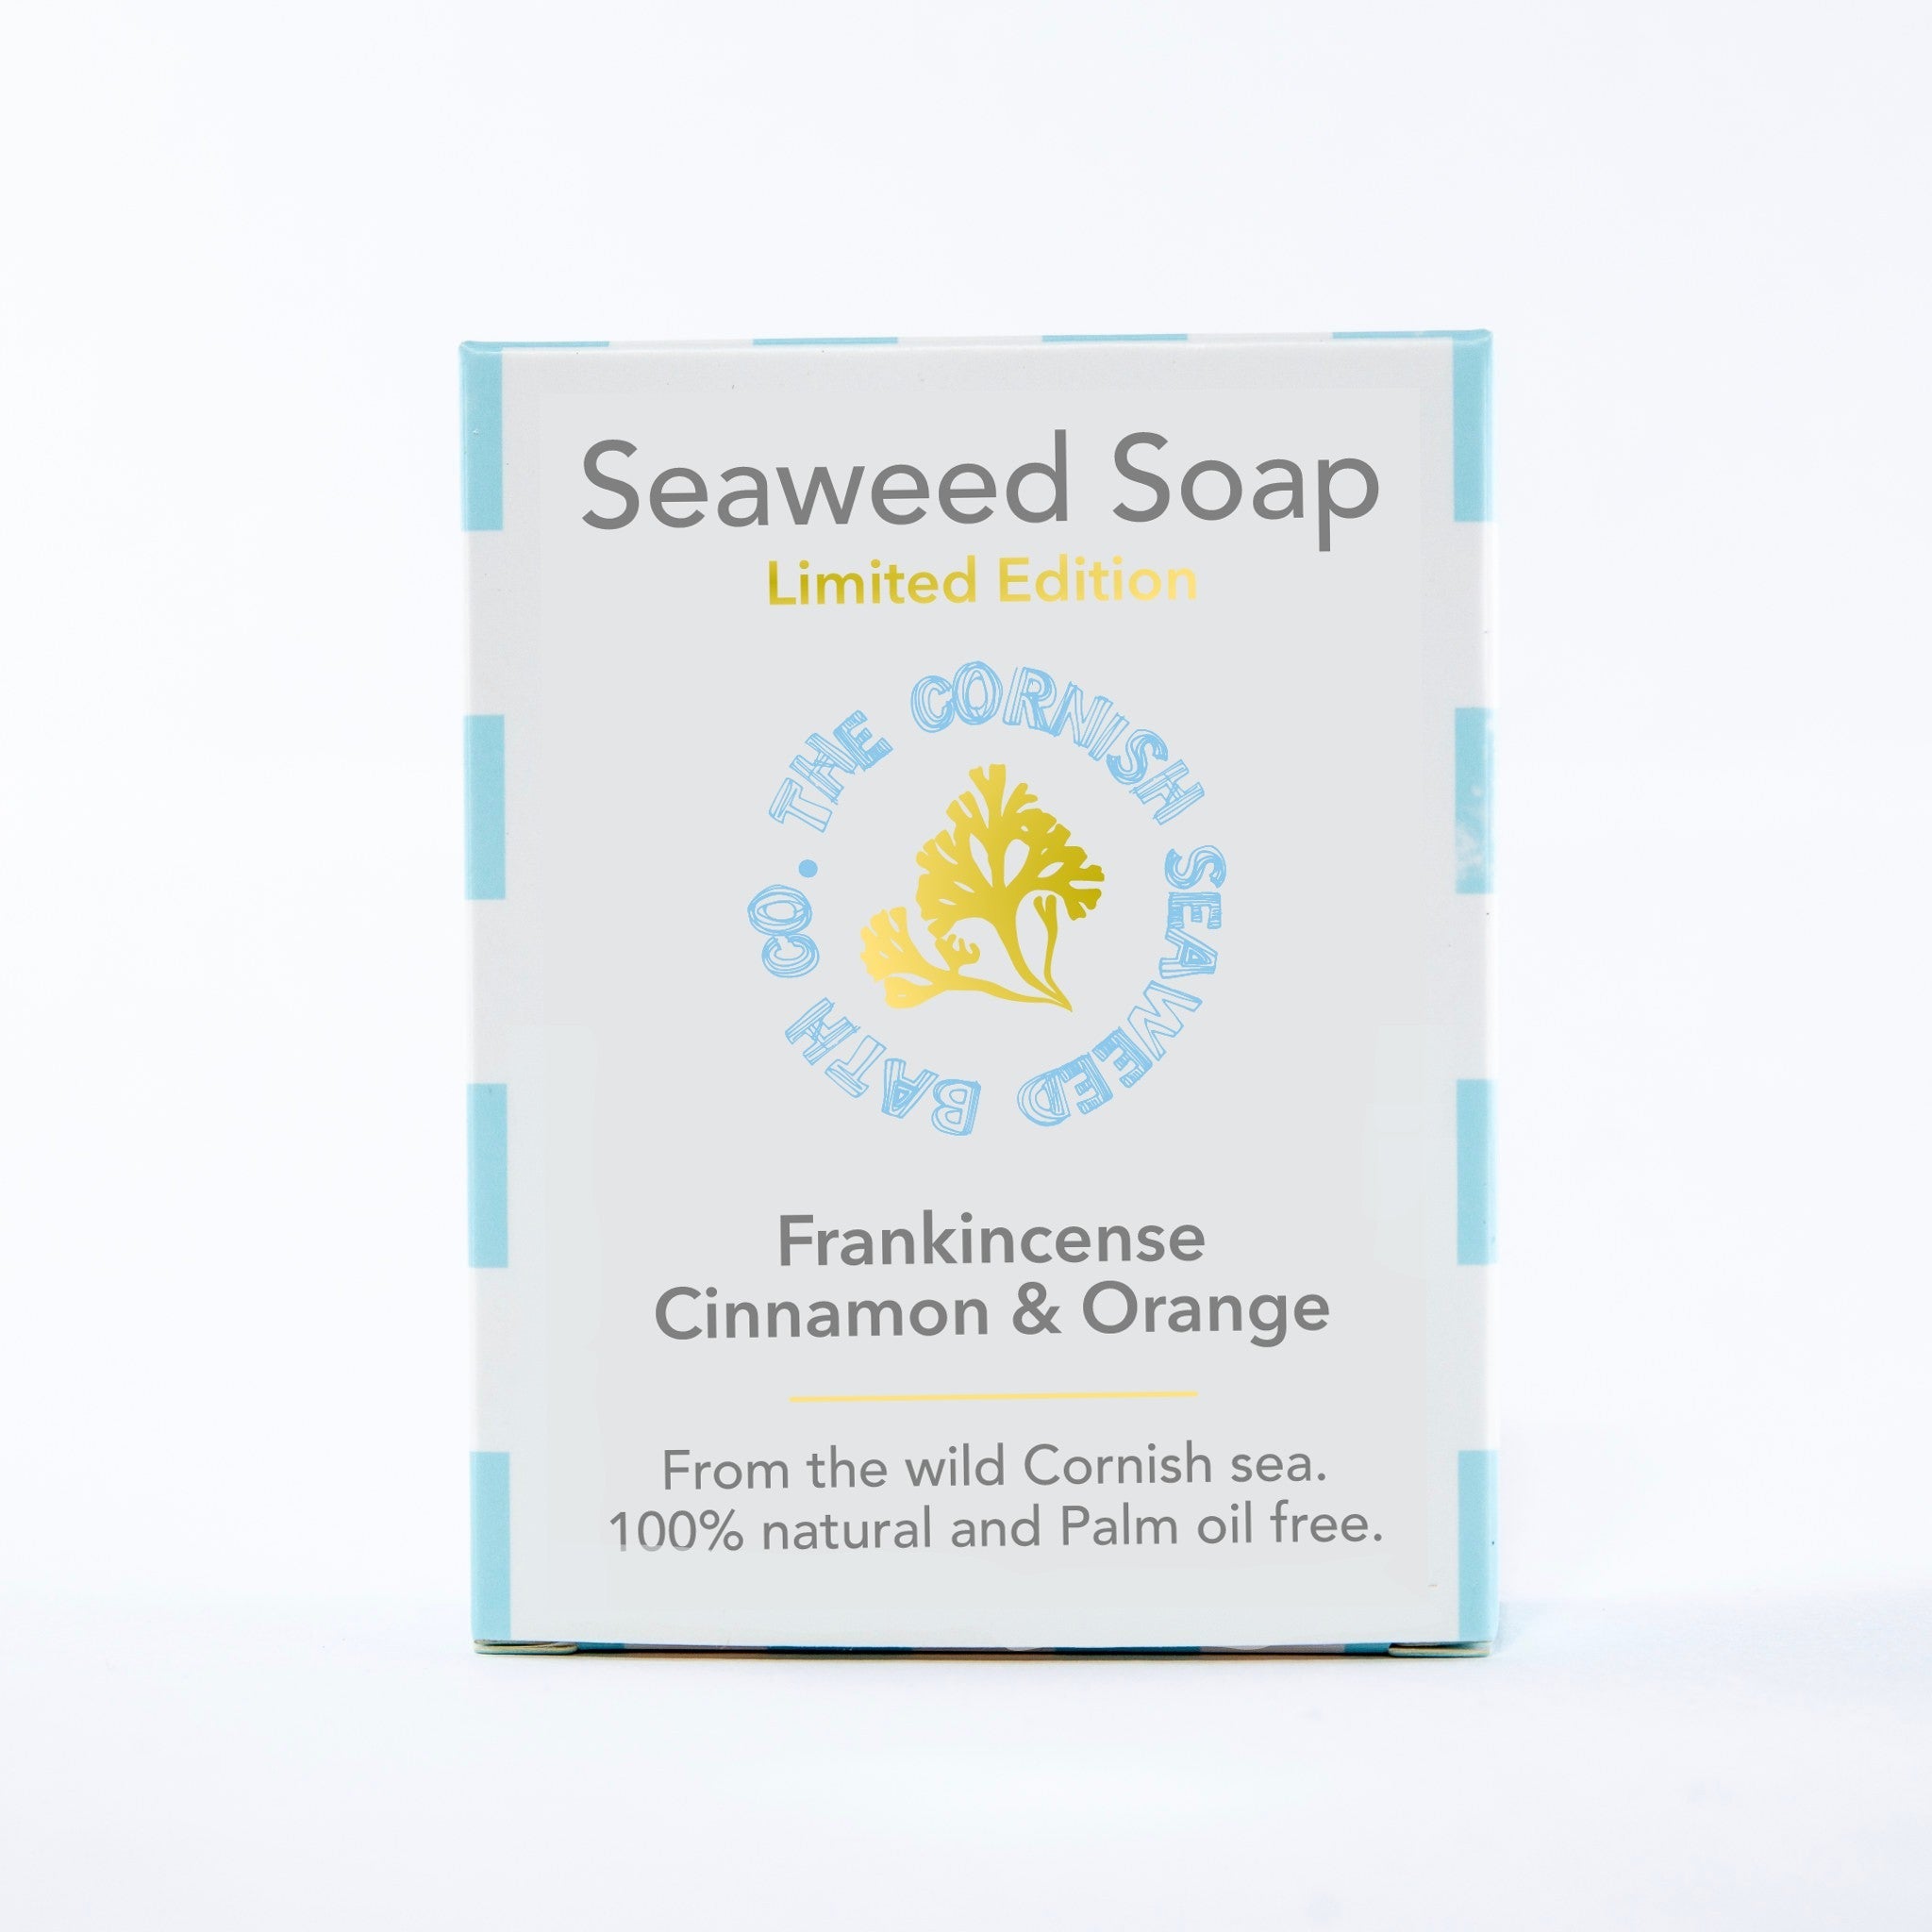 Limited Edition Seaweed Soap - The Cornish Seaweed Bath Co.